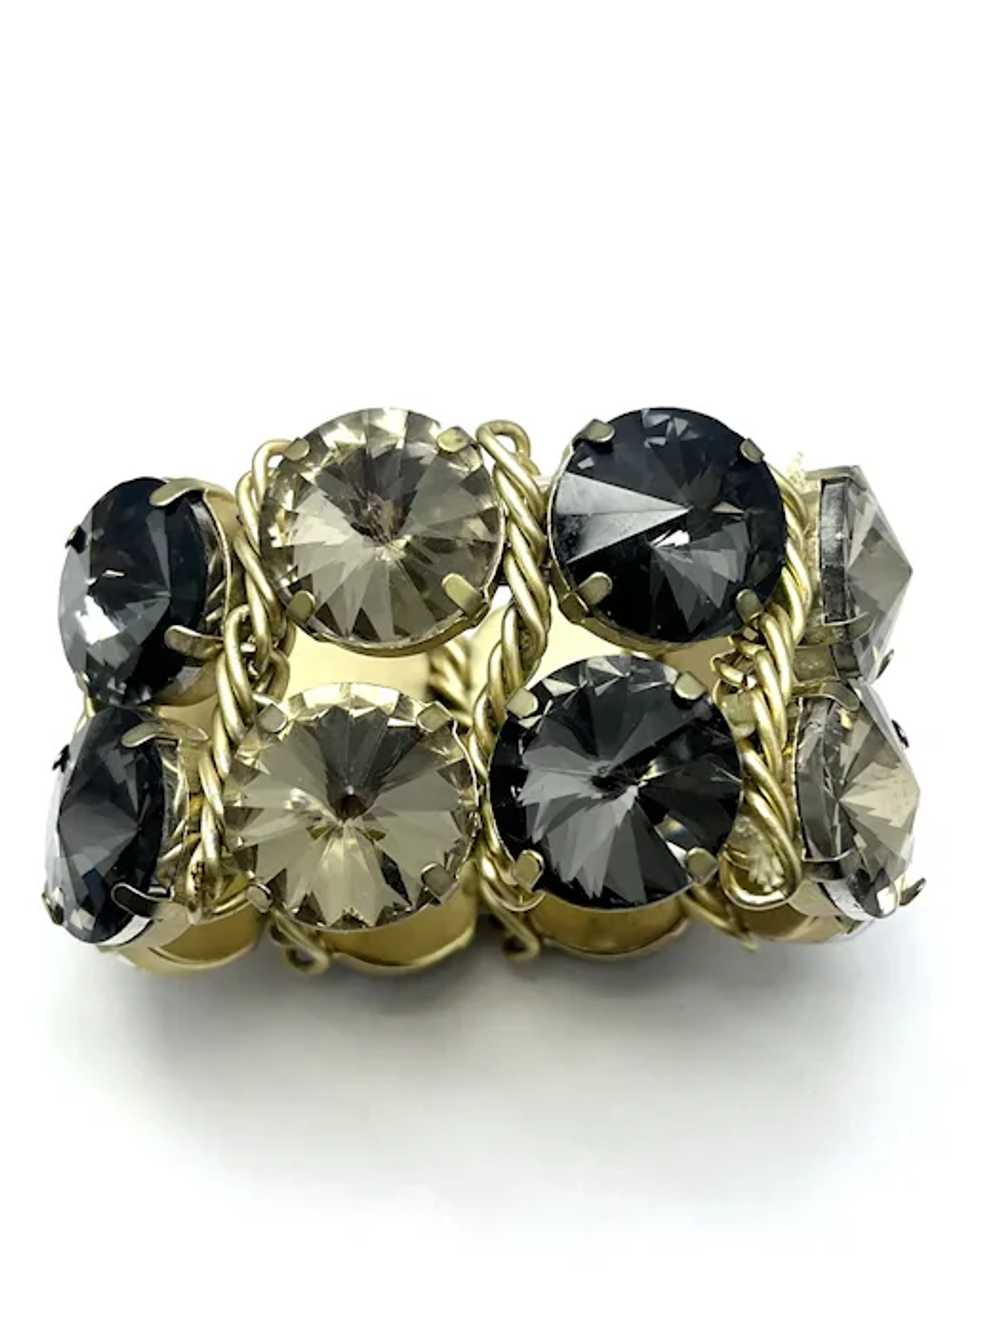 Vintage Rhinestone Jeweled Stretch Bracelet - image 3